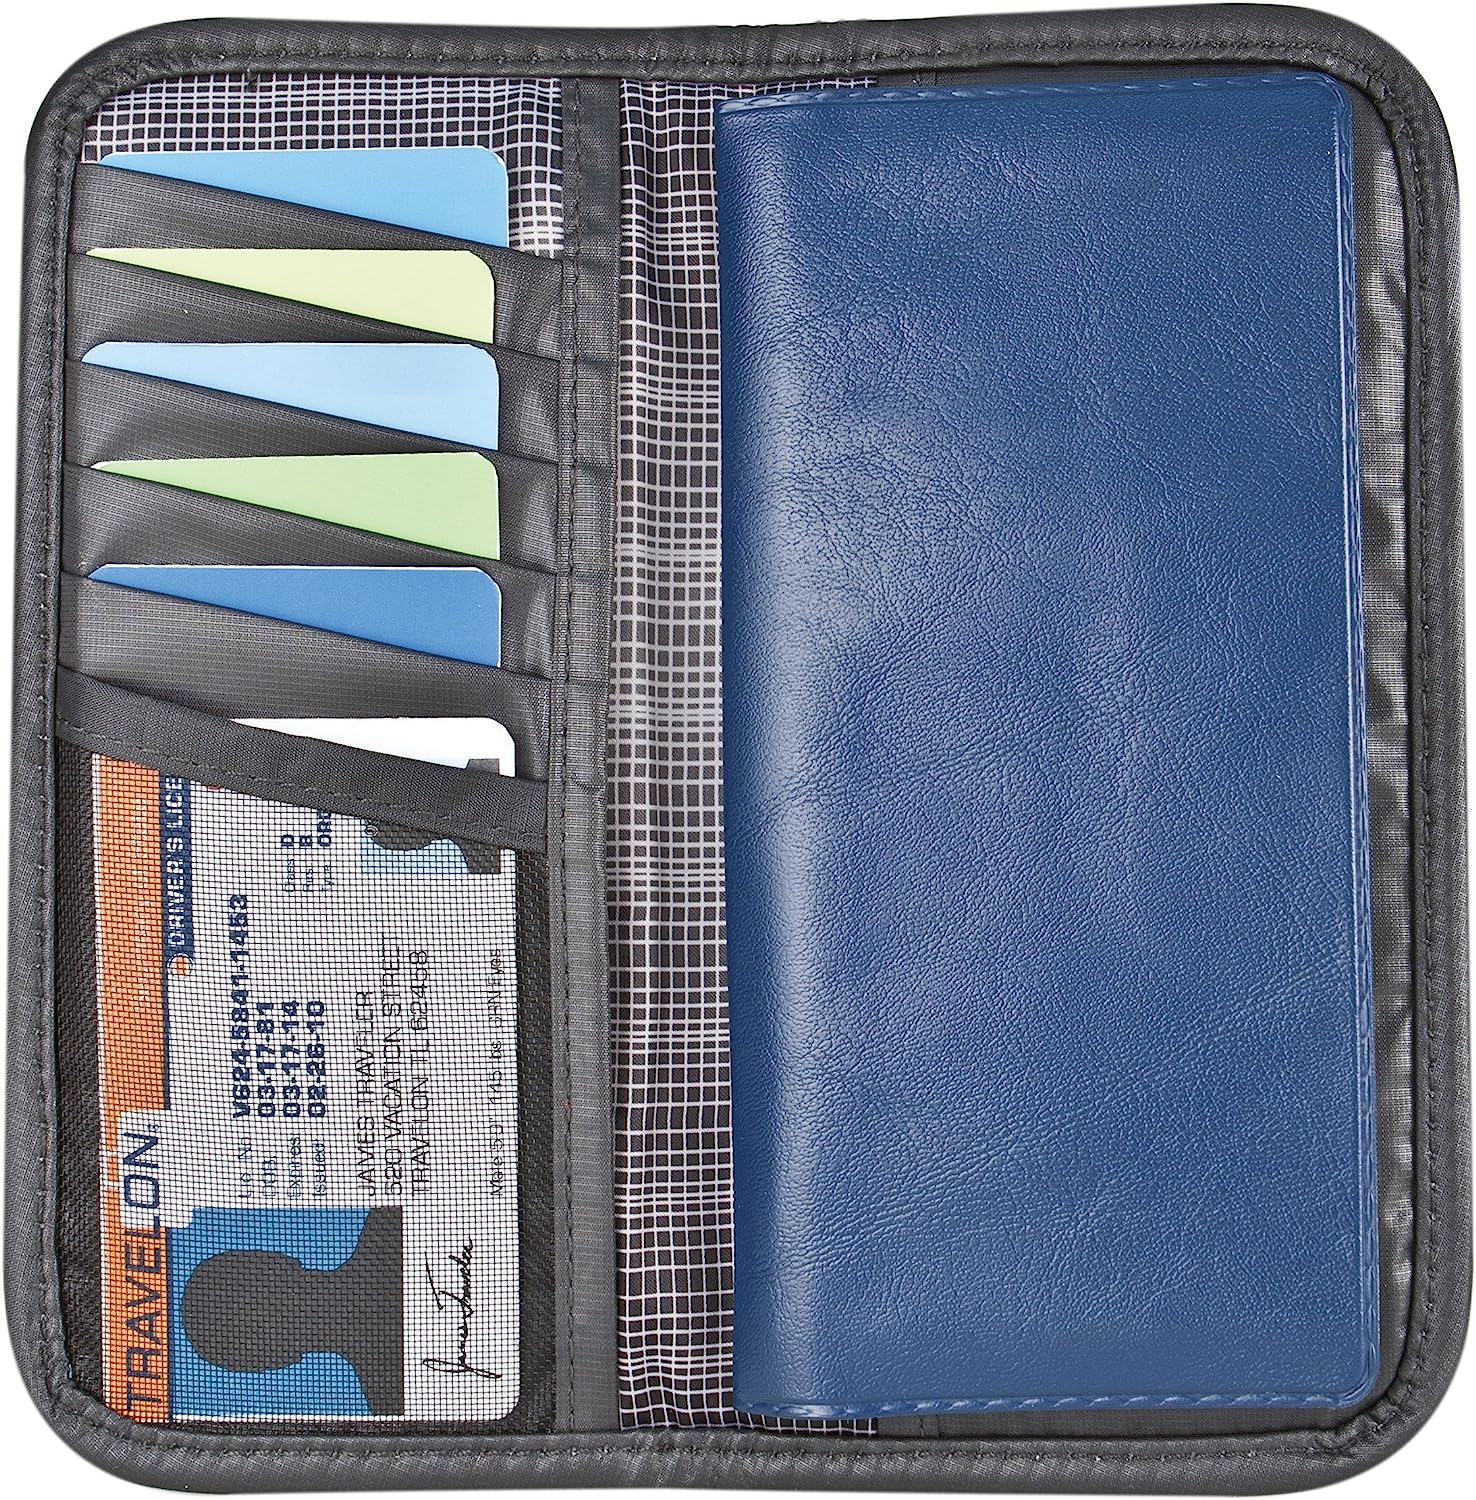 Travelon Luggage Safe ID Checkbook Wallet (Black) - image 4 of 4